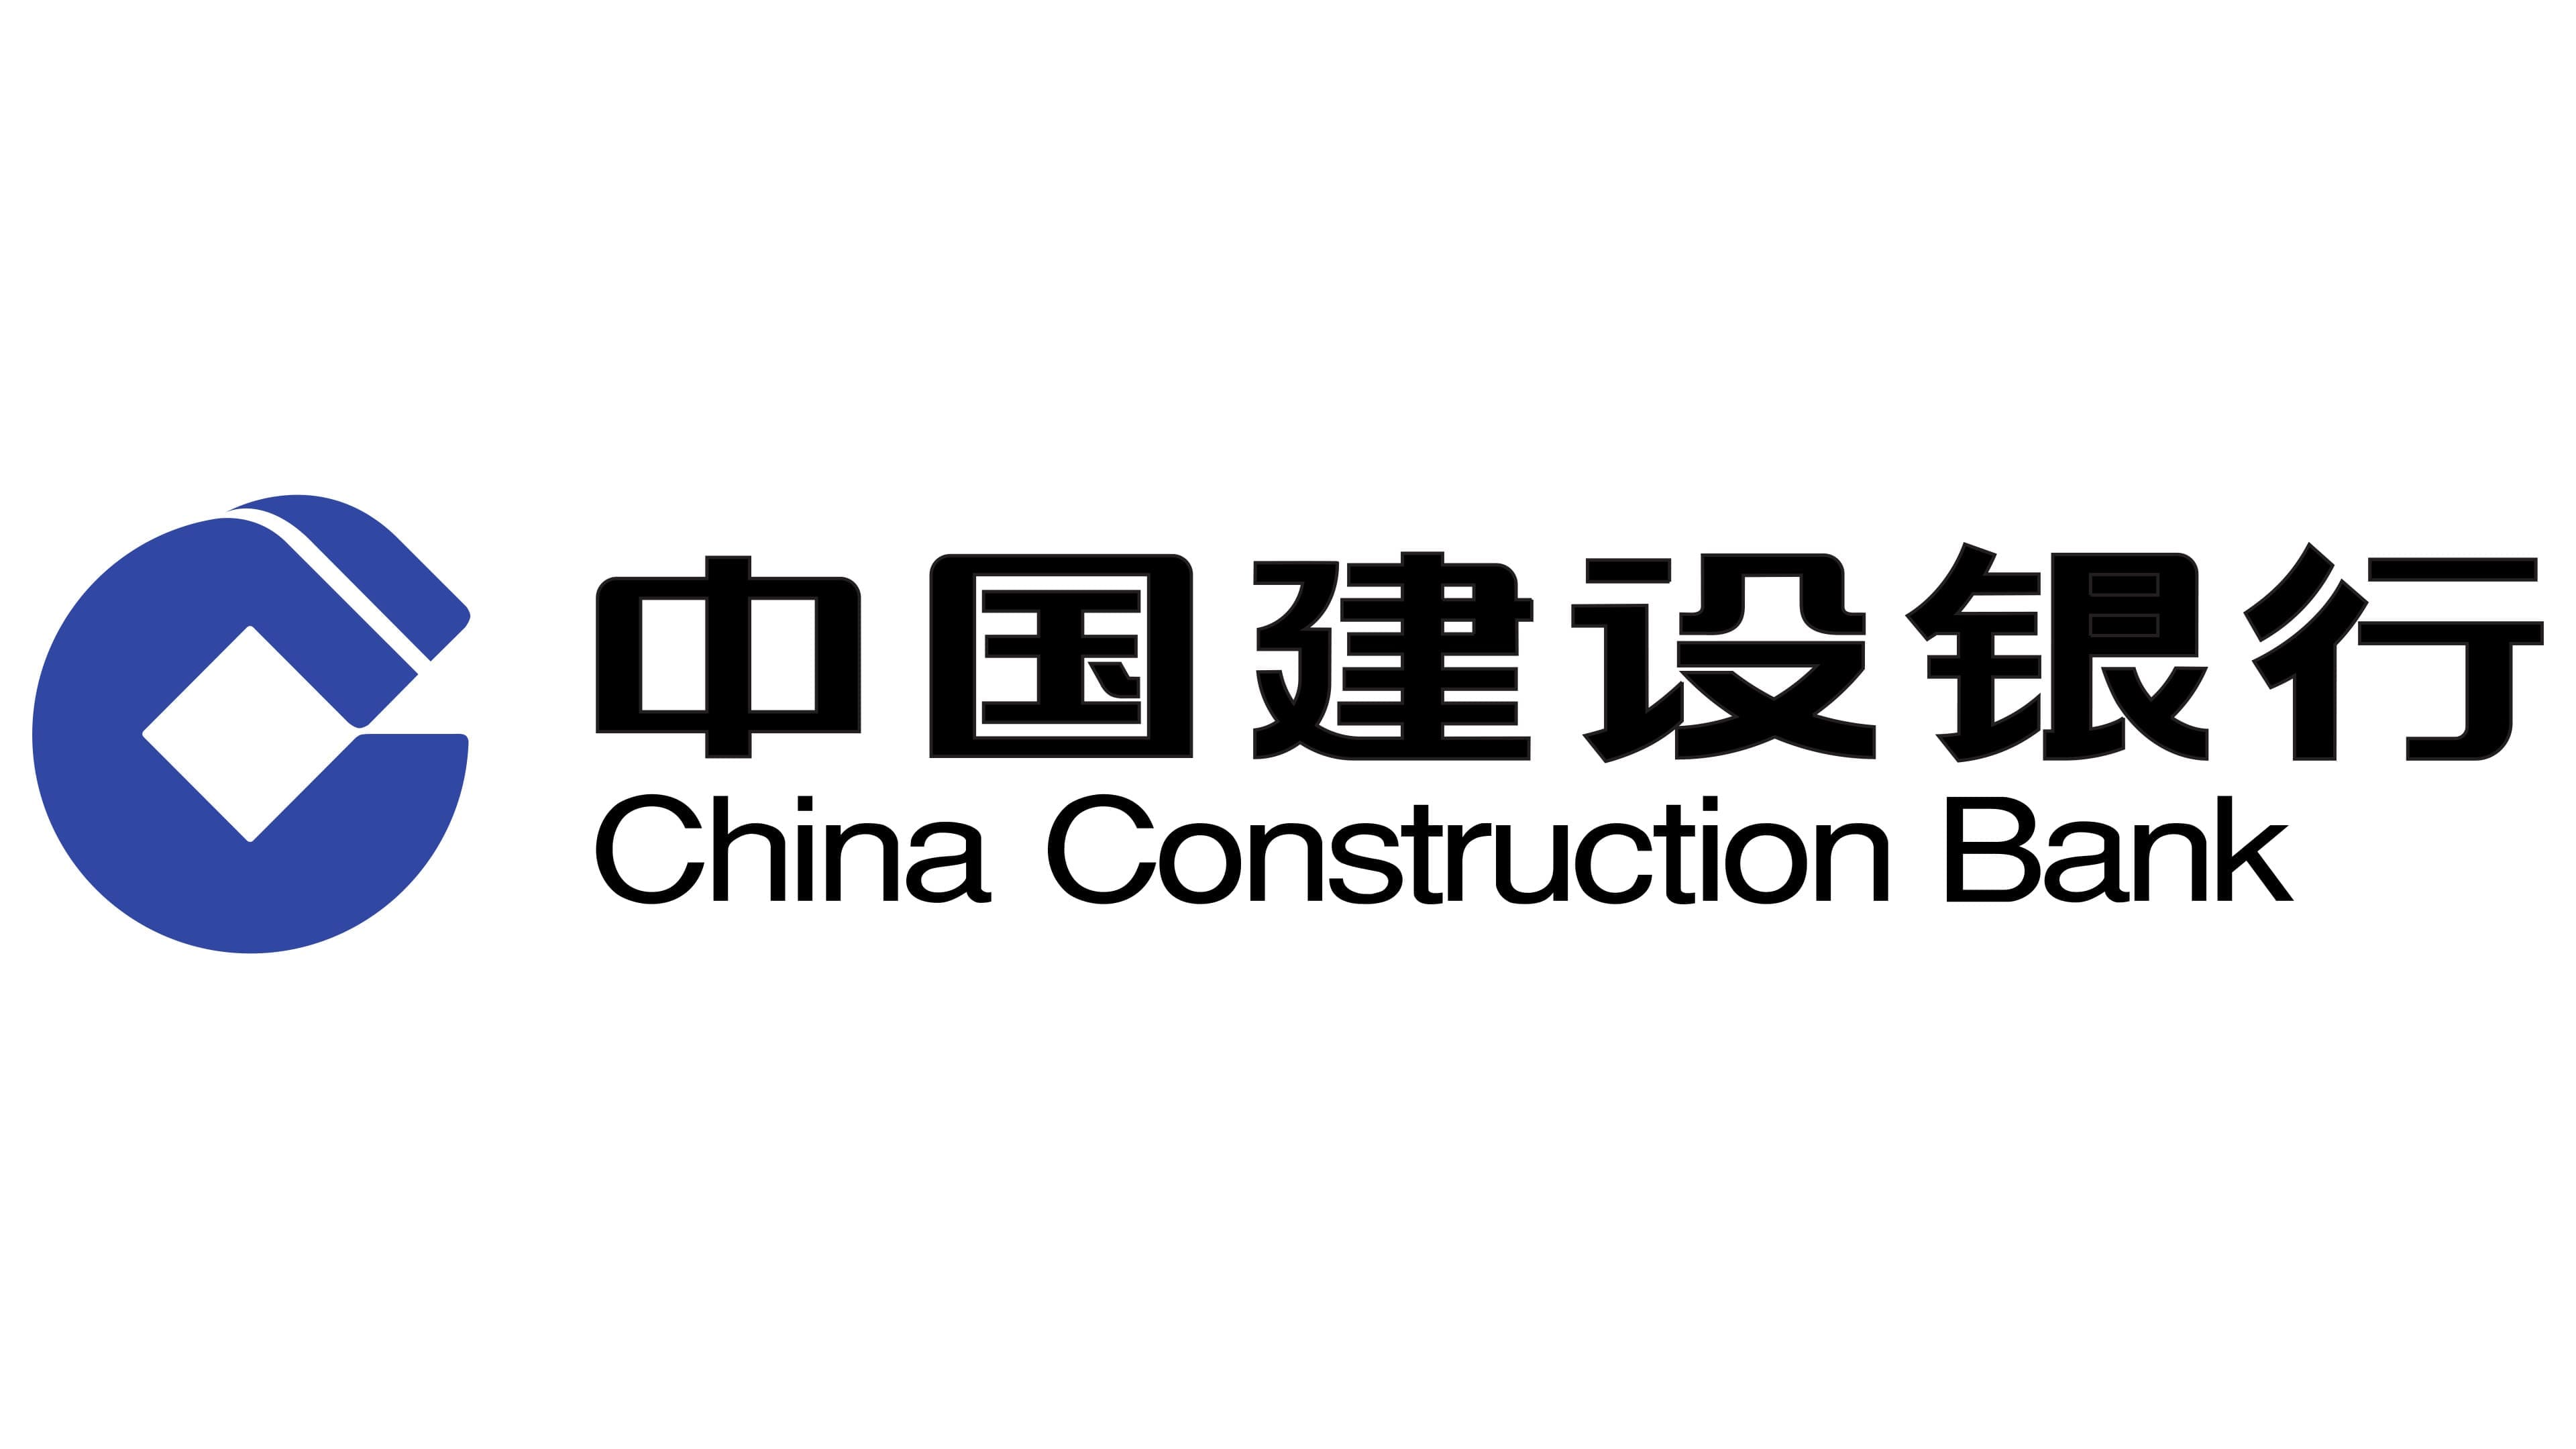 Chouzhou commercial bank co ltd. China Construction Bank Corporation. China Construction Bank logo. Строительного банка Китая. Строительный банк (CCB).